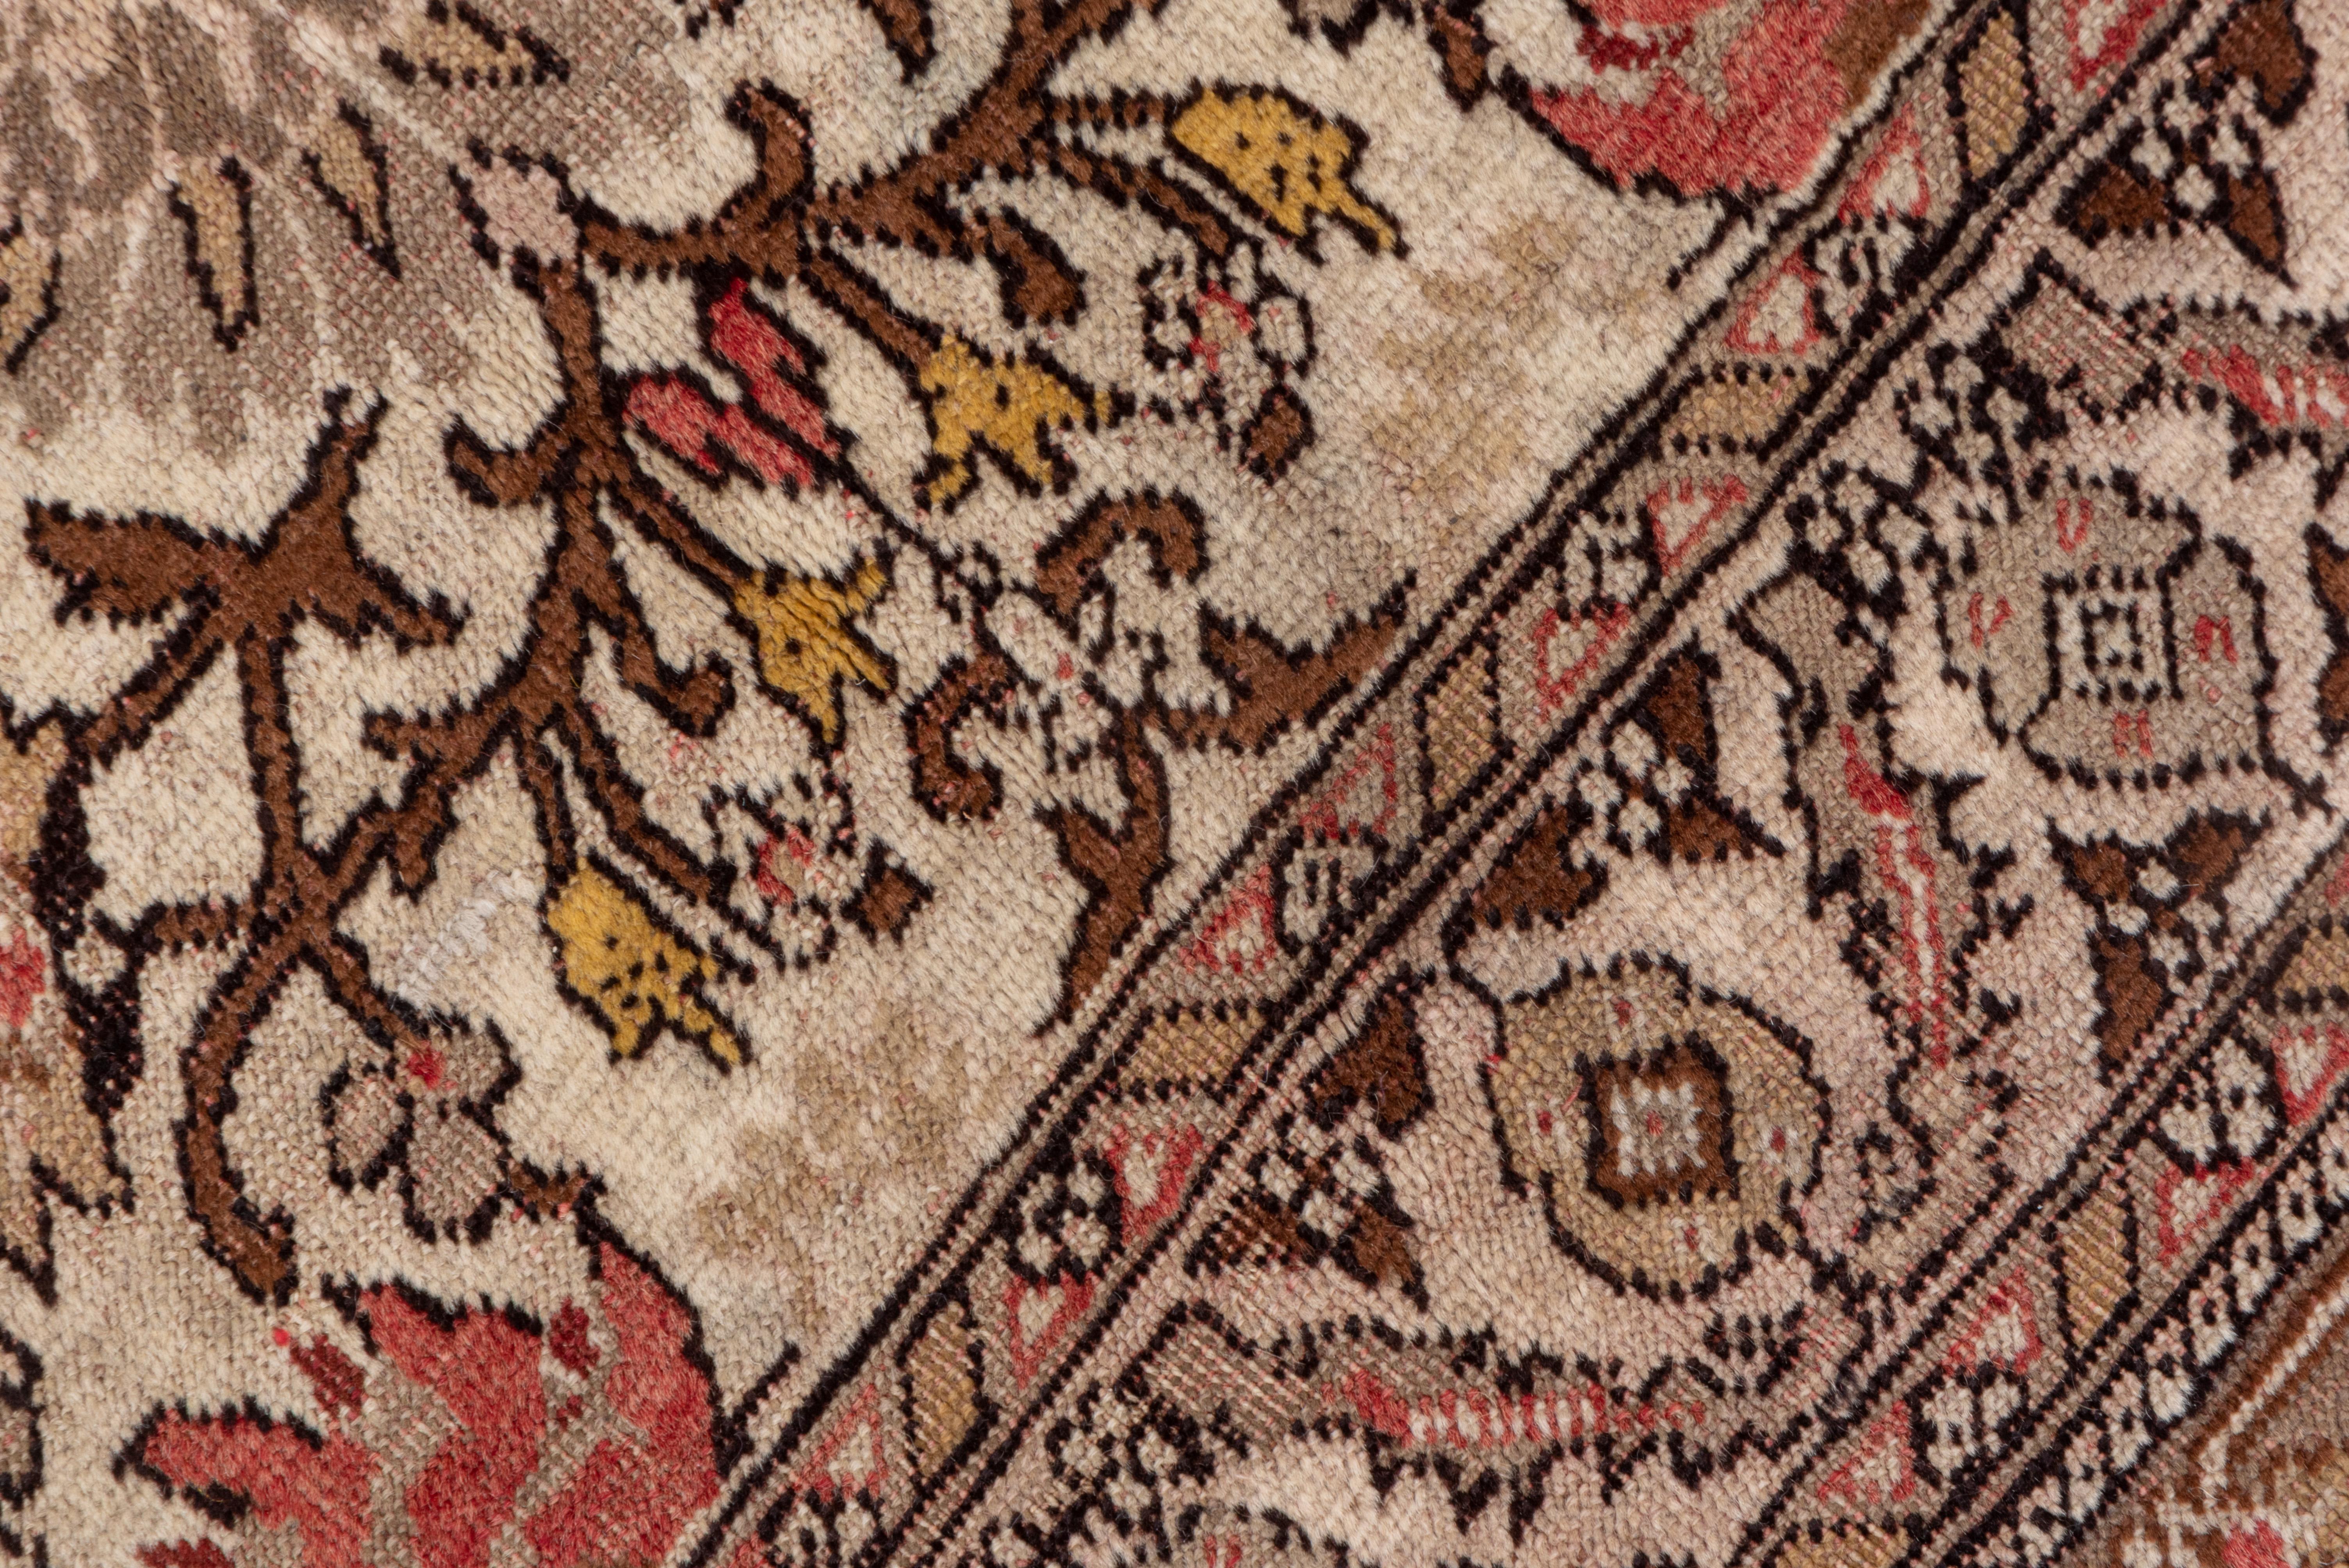 Wool Antique Turkish Oushak Carpet, Brown Borders, Ivory Field, Medallion